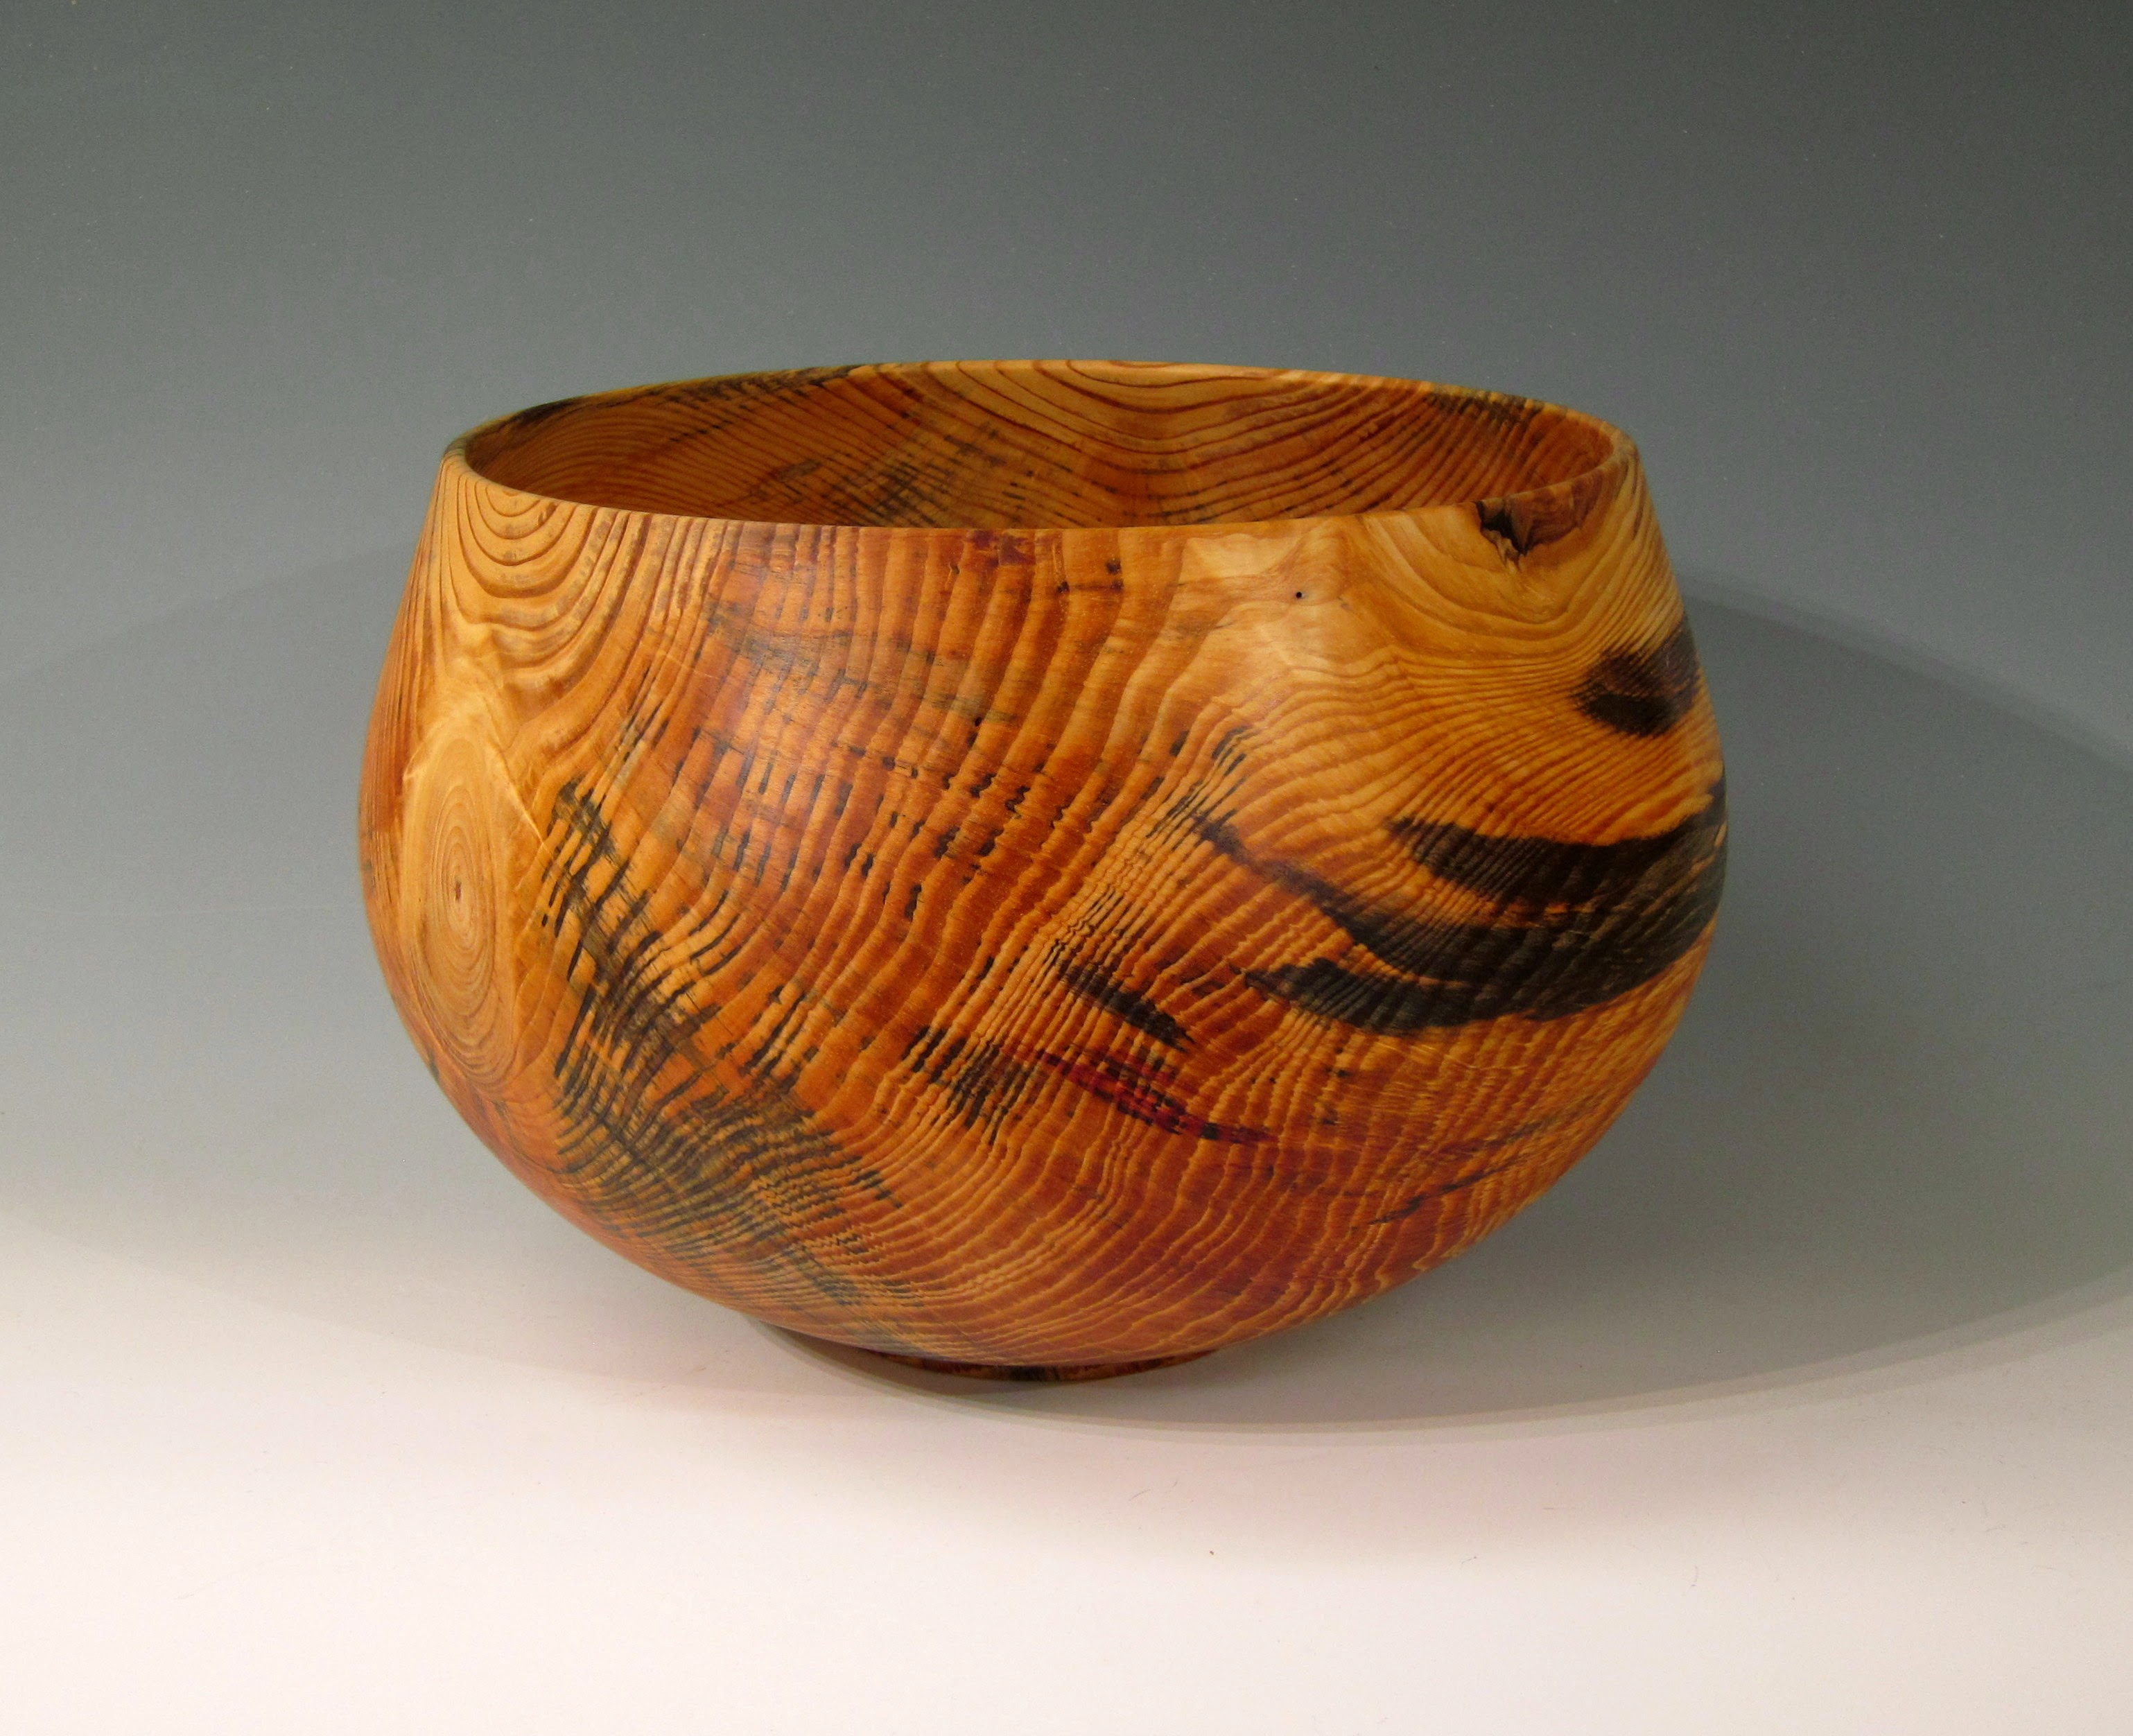 Chris Boerner - Pine Bowl - Wood from Duke Forest, 20" x 15"